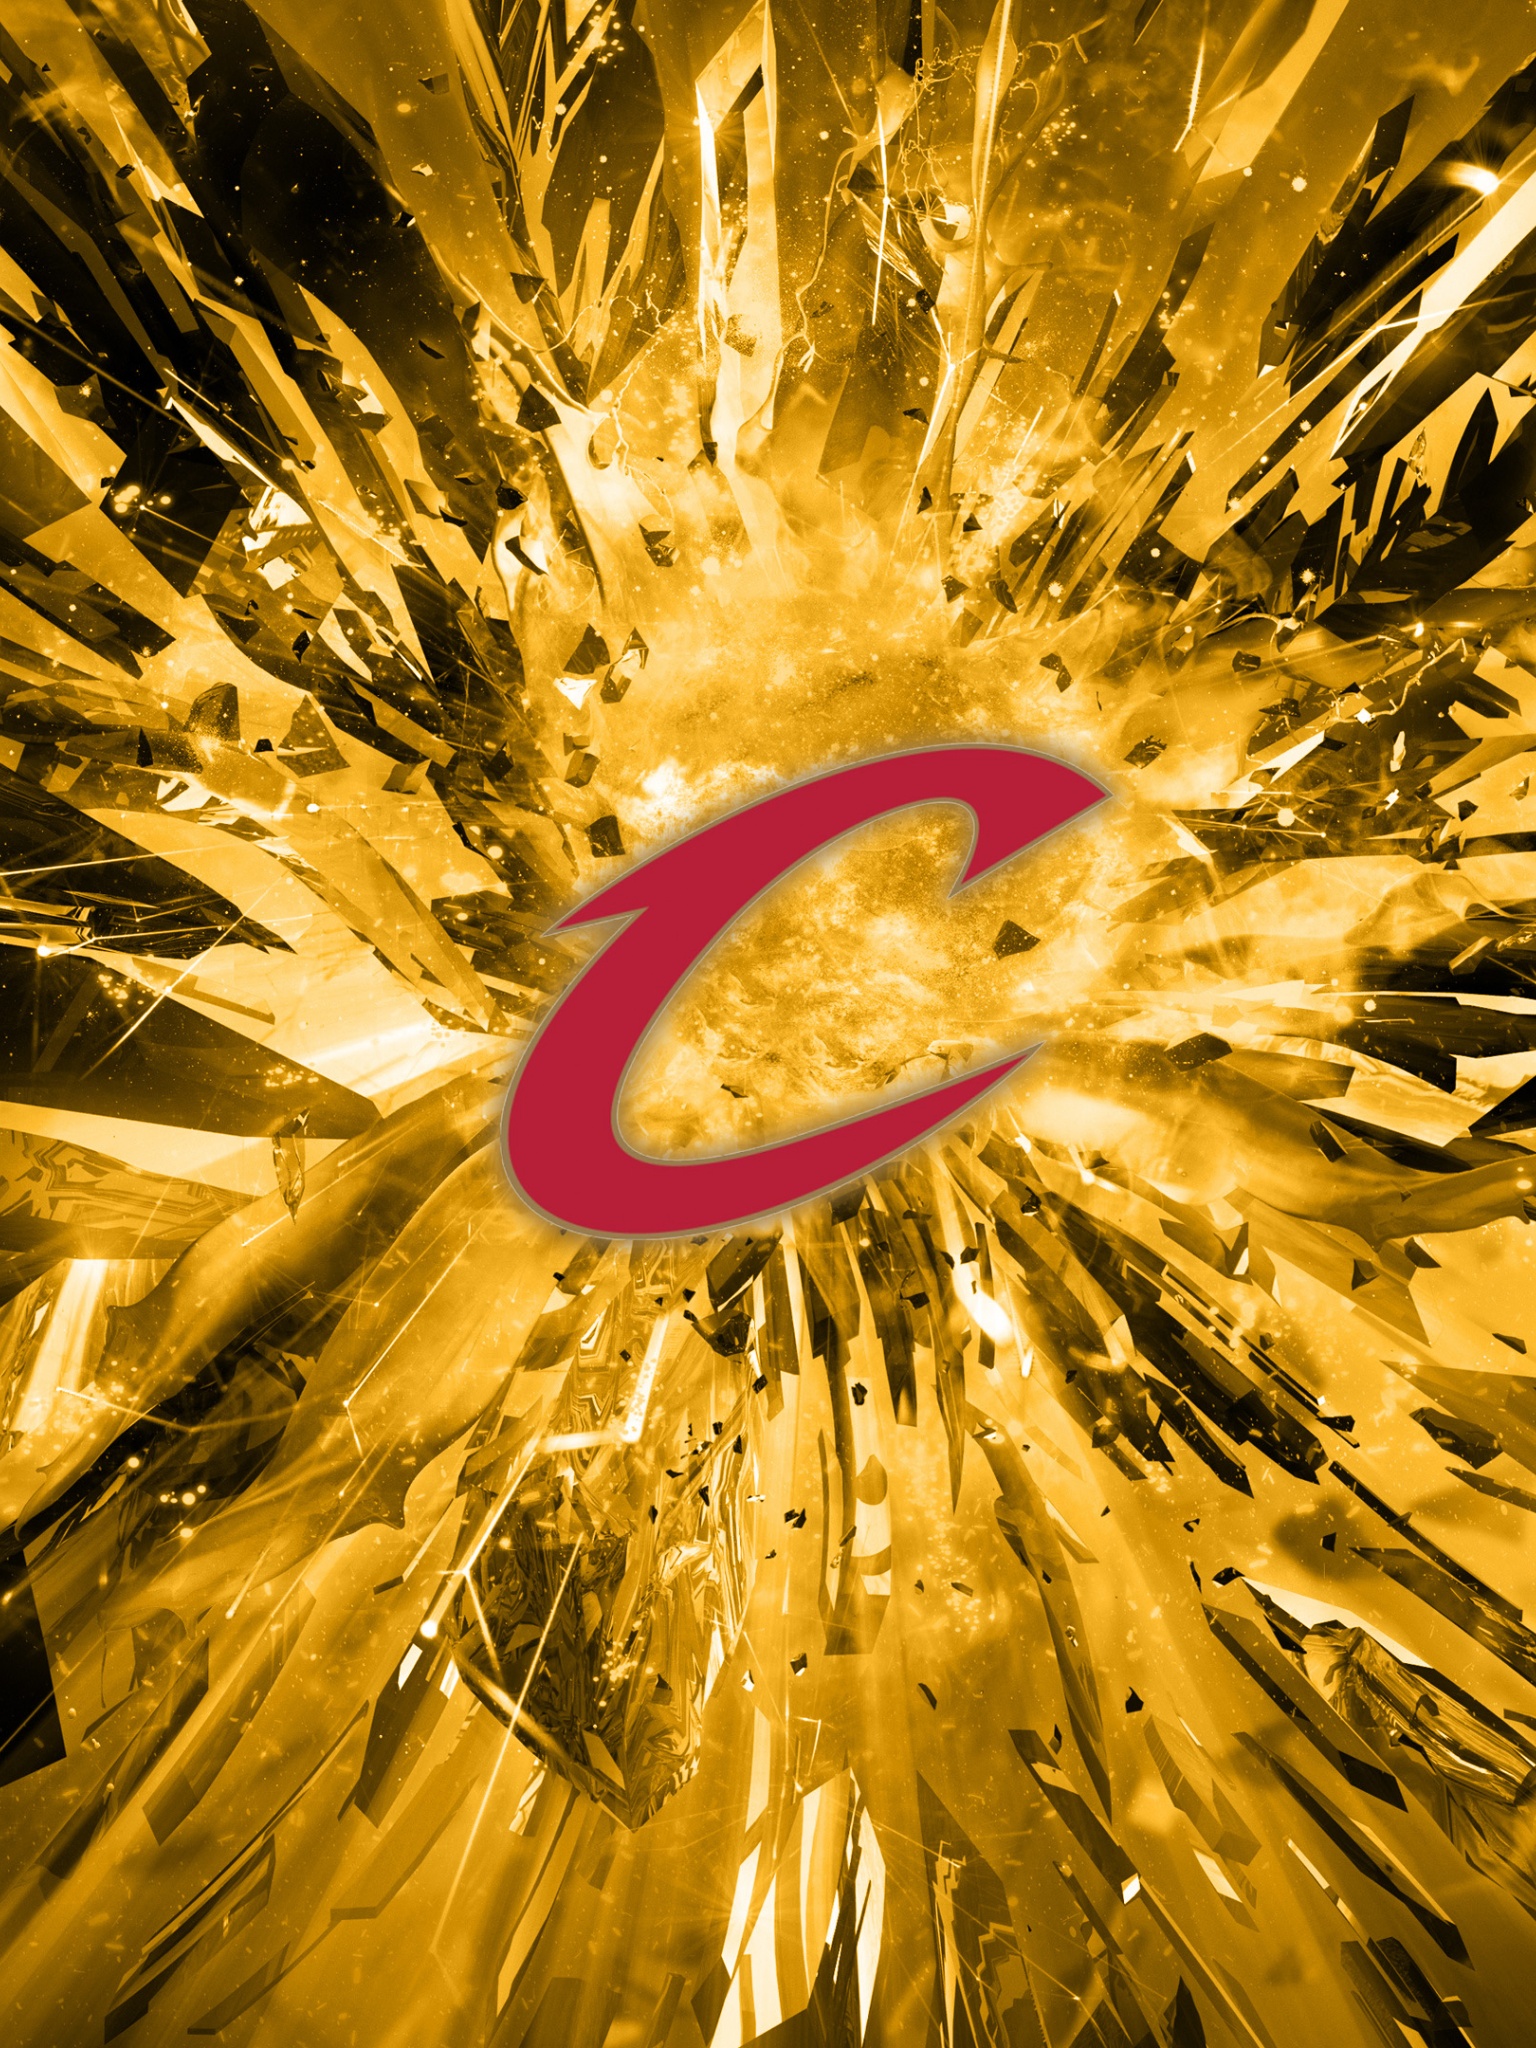 Cleveland Cavaliers 2015 Logo